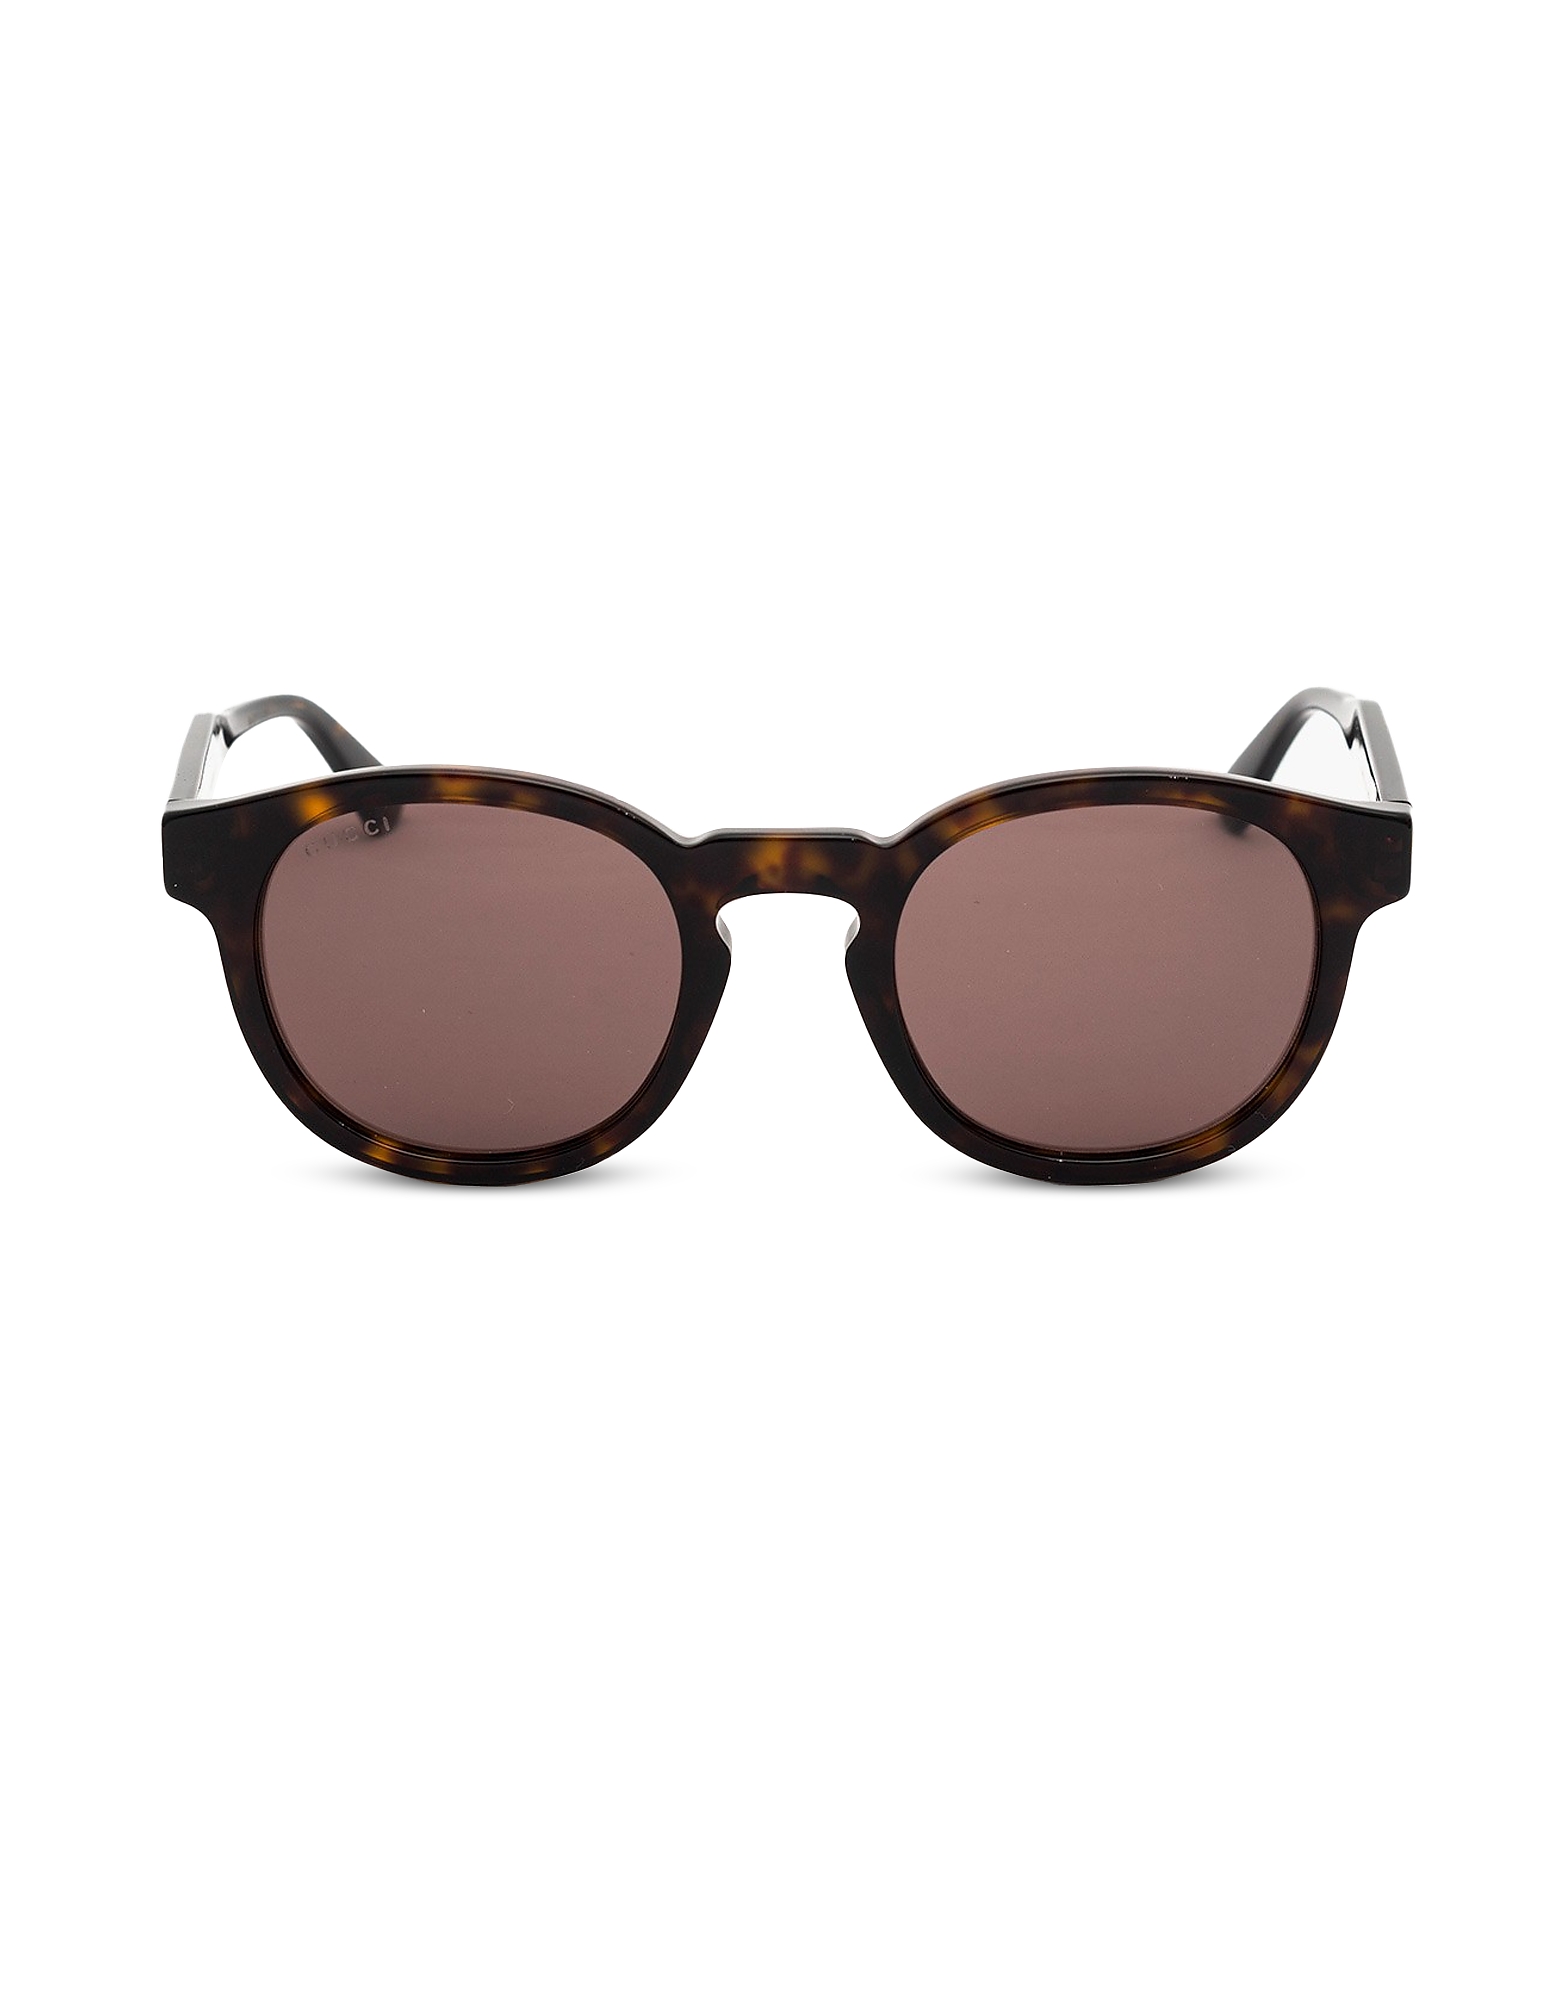 Gucci Sunglasses Havana Round Frame Men's Sunglasses